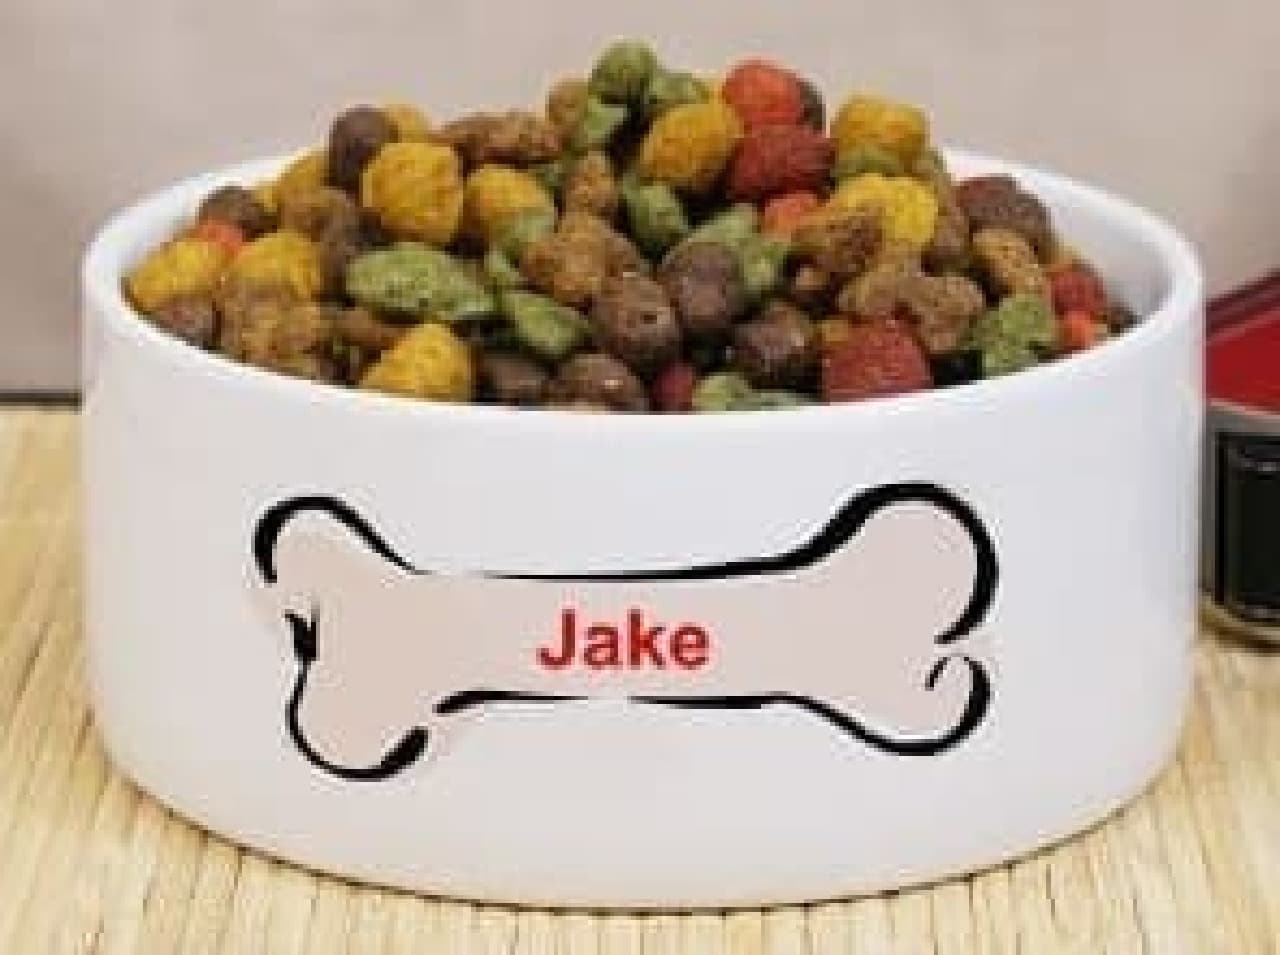 Reference image: Food bowl with dog's name